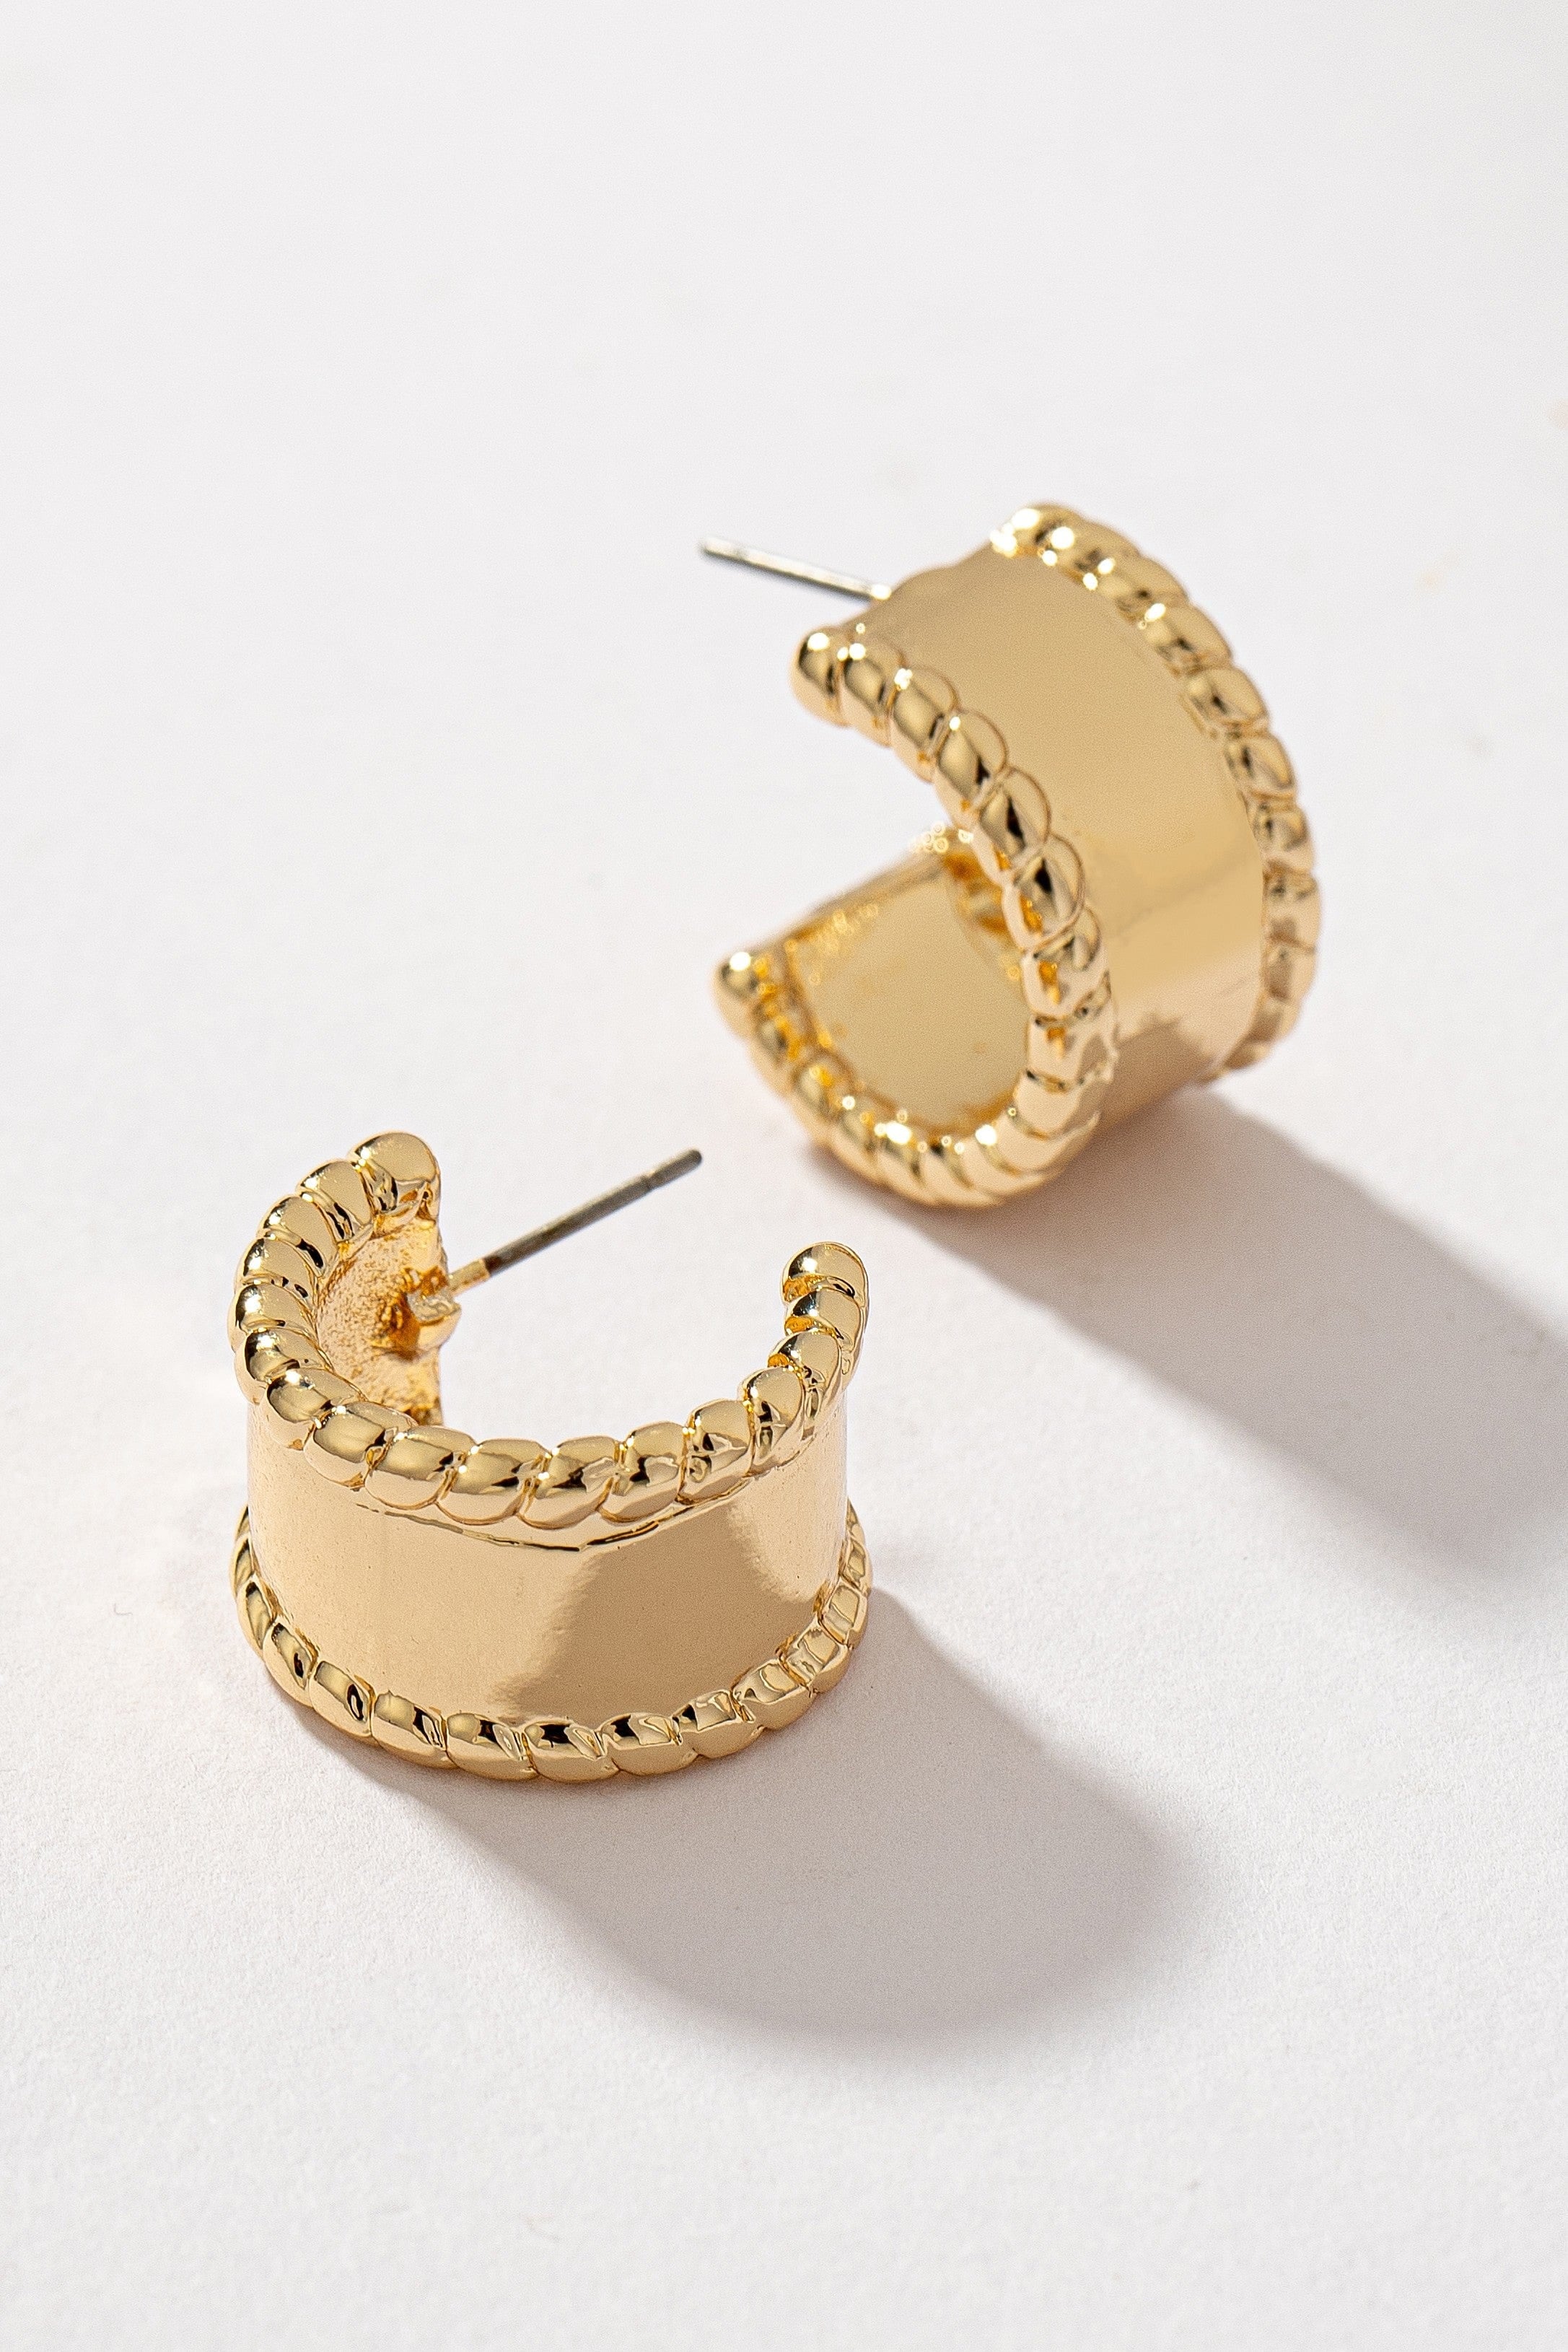 LA3accessories Jewelry - Earrings Wide Textured Huggie Hoops In Multi